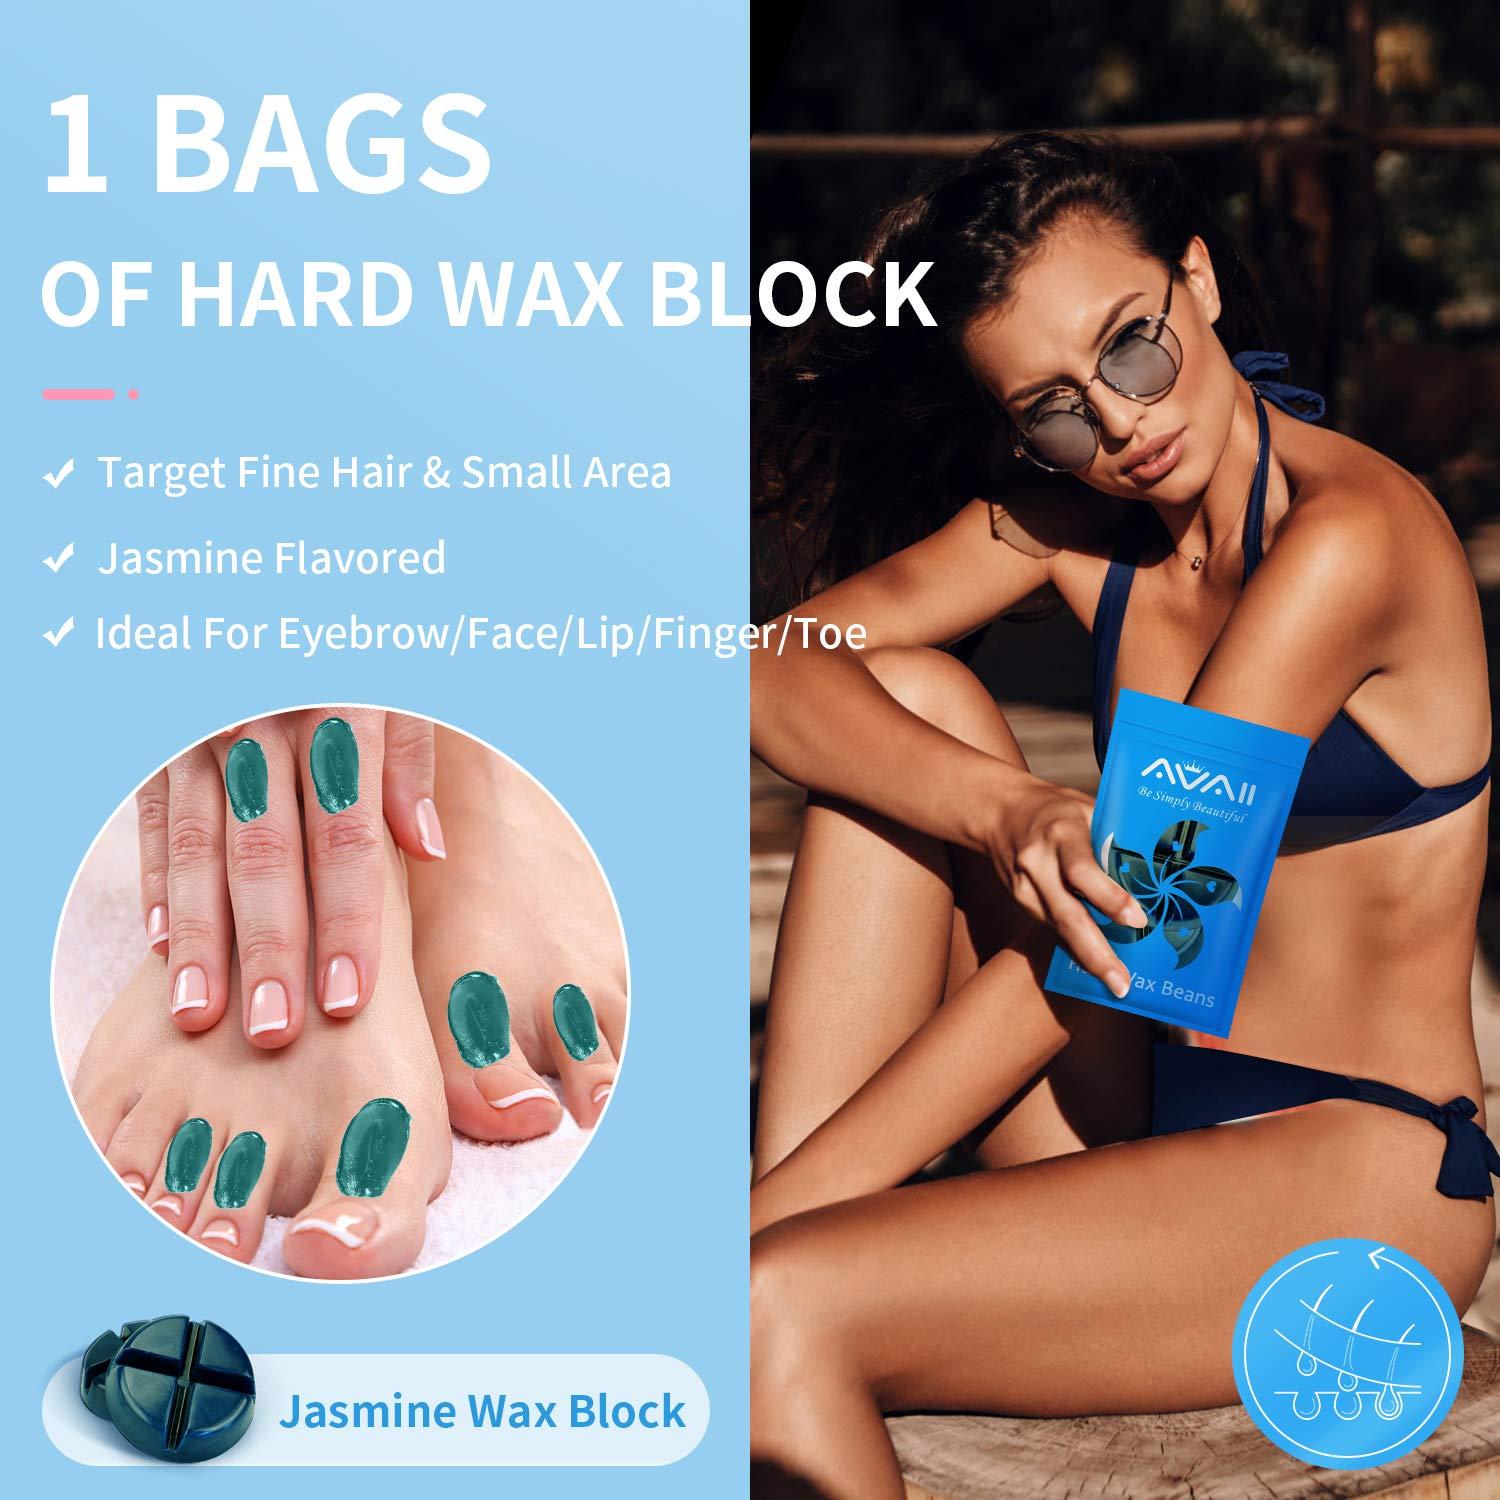 Waxing Kit, AVAII Wax Warmer Hair Removal Wax Kit with 4 Bags Hard Wax  (3.5oz/Bag) 20 Wax Applicator Sticks for Full Body, Legs, Face, Eyebrows,  Bikini Women Men at Home Waxing